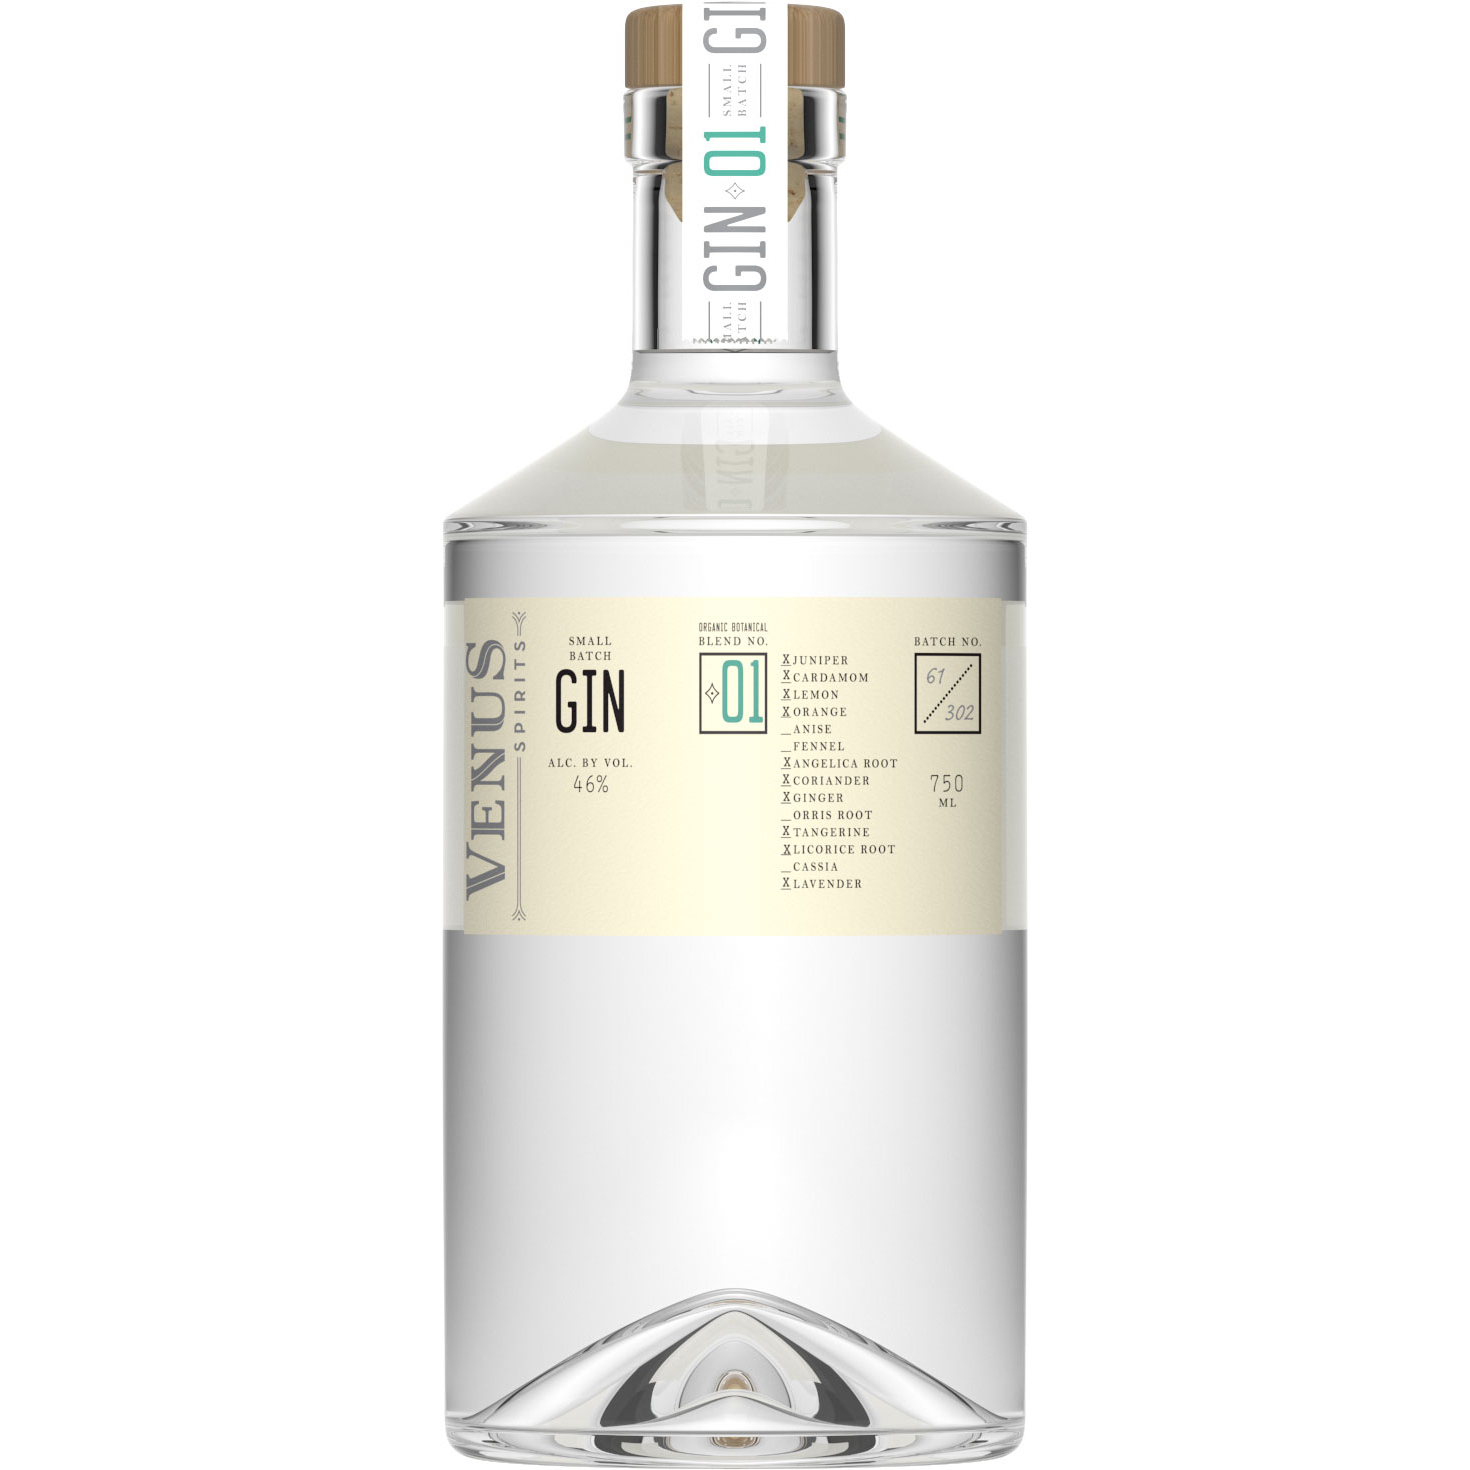 venus-gin-bottle_front.jpg